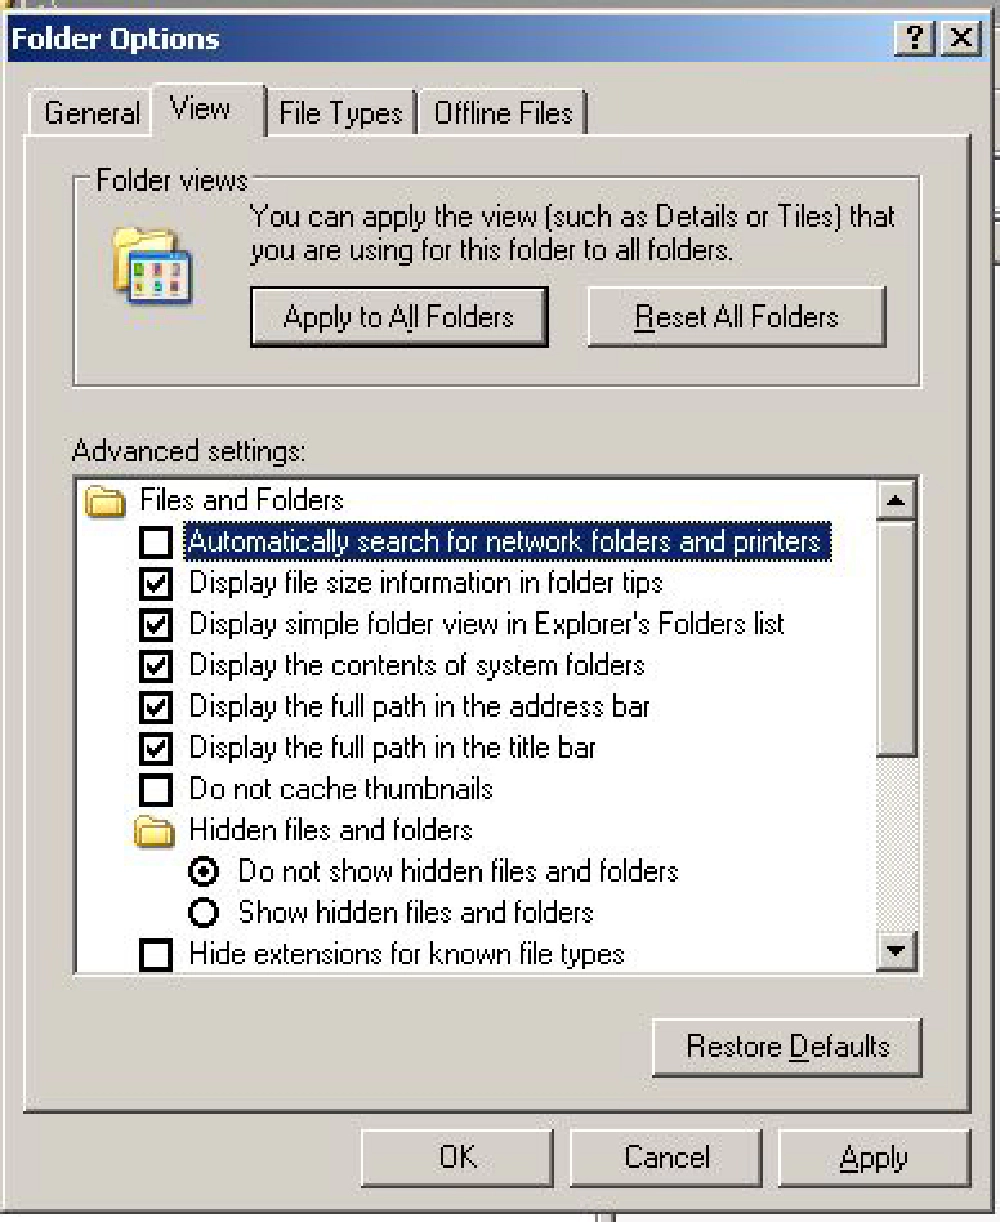 Folder Options - View